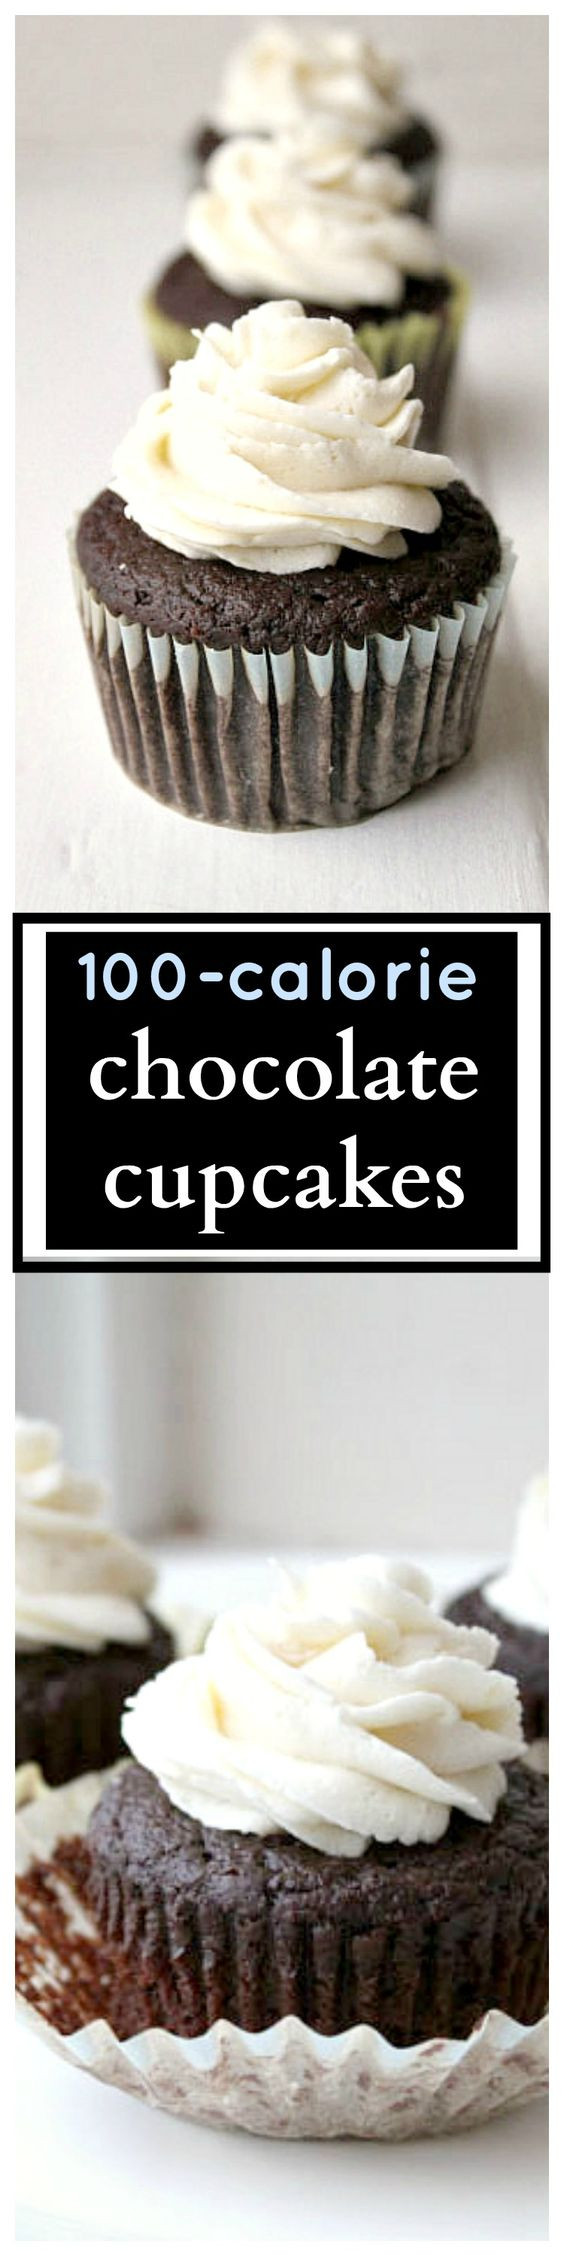 Healthy Chocolate Desserts Under 100 Calories
 Healthy Chocolate Cupcakes for 100 Calories